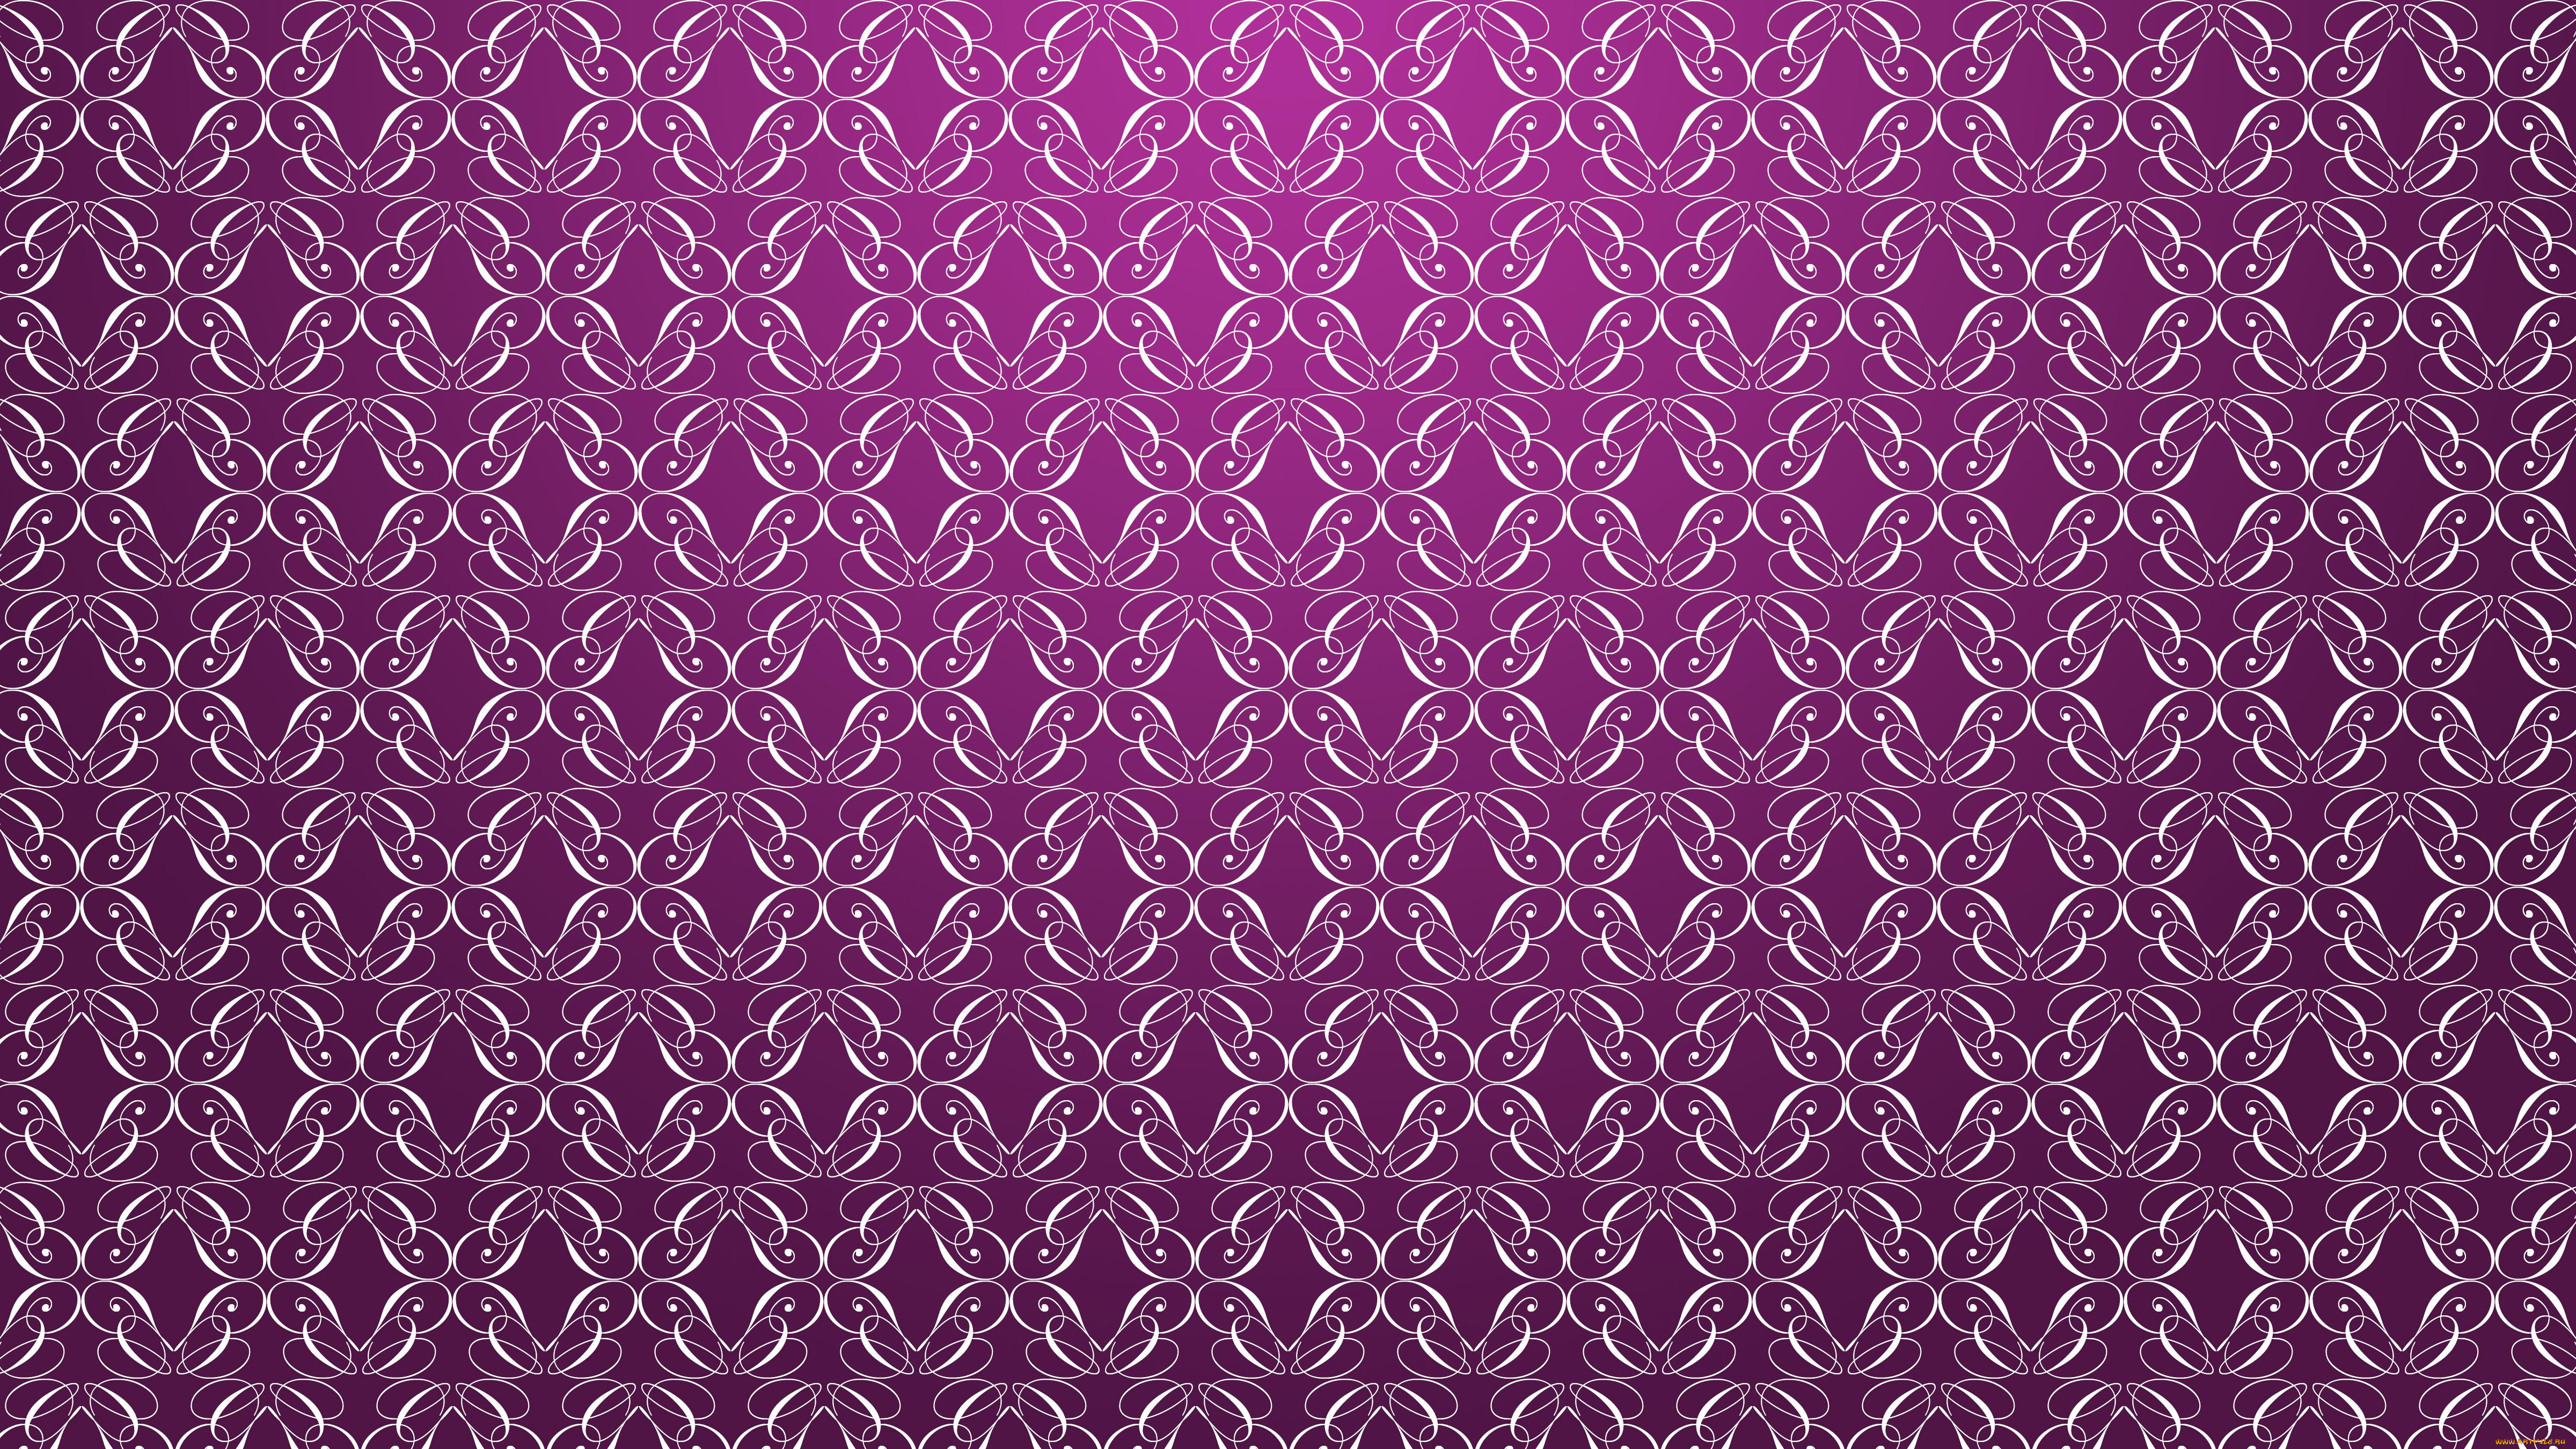 Pattern pictures. Фон с узорами. Фиолетовые узоры. Обои текстура. Фиолетовый фон с узорами.